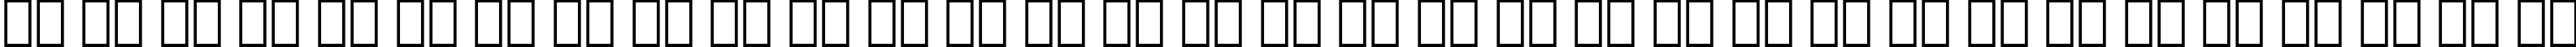 Пример написания русского алфавита шрифтом Square 721 Bold Condensed BT